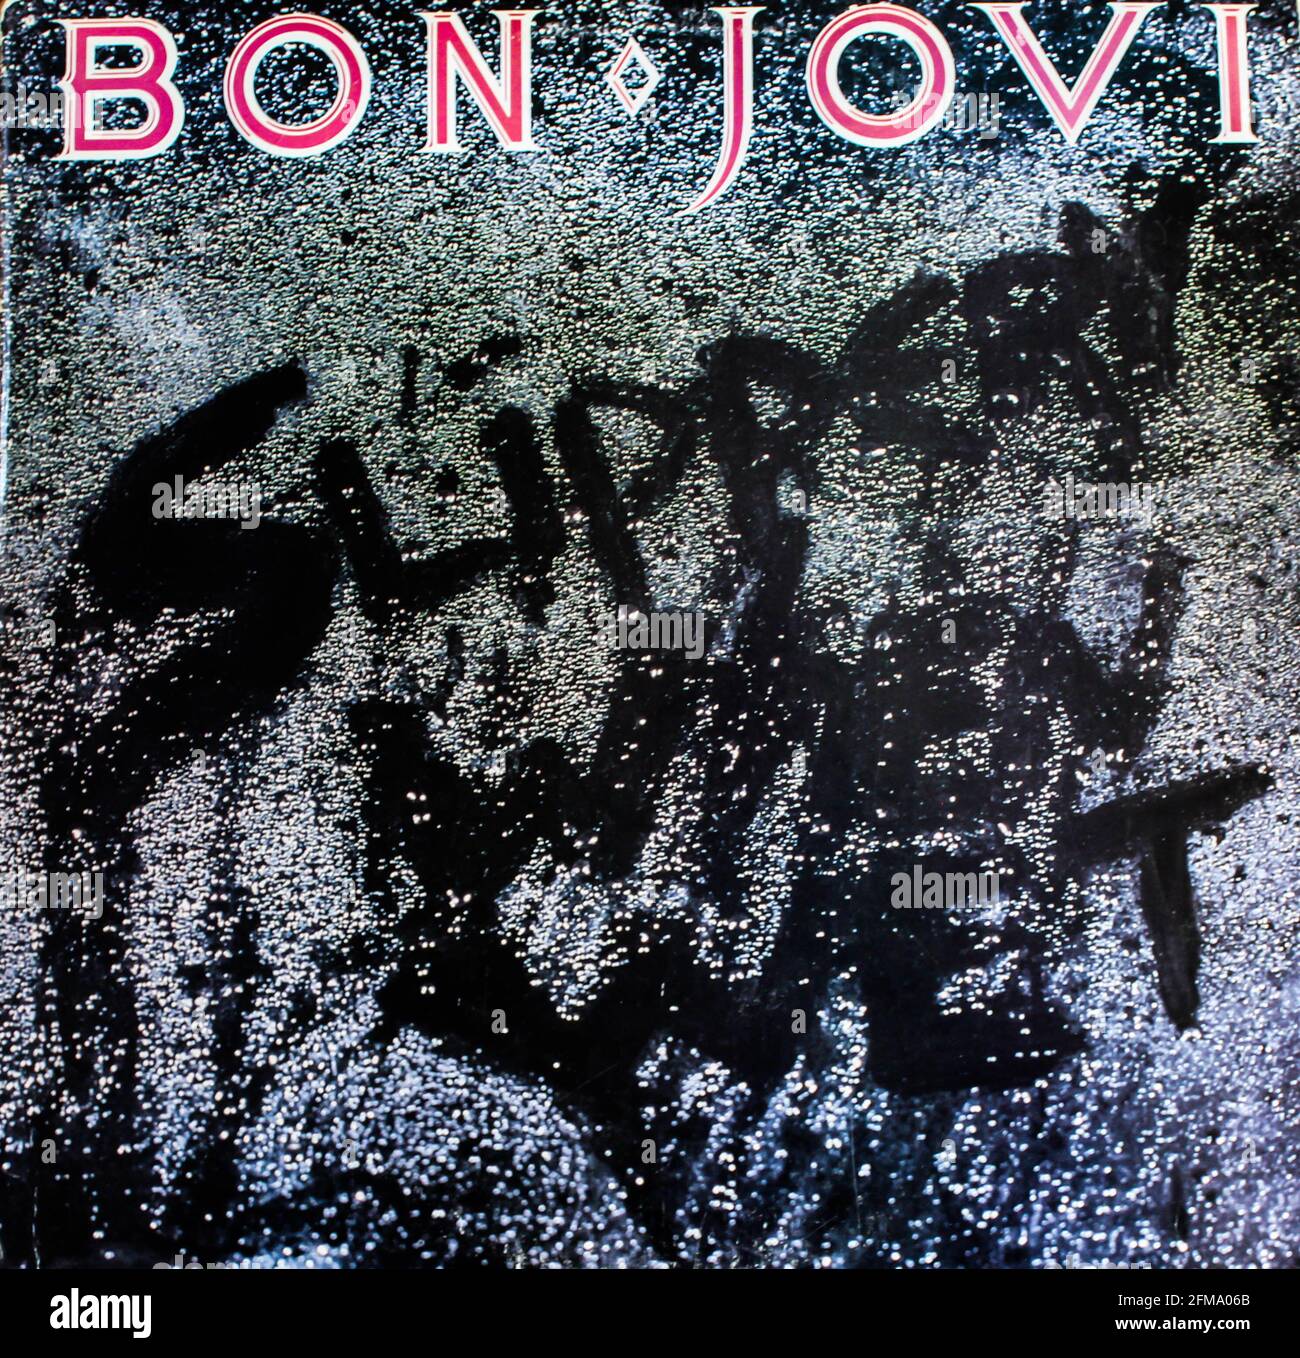 Glam metal and hard rock artist, Bon Jovi music album on vinyl record LP disc. Titled: Slippery When Wet album cover Stock Photo